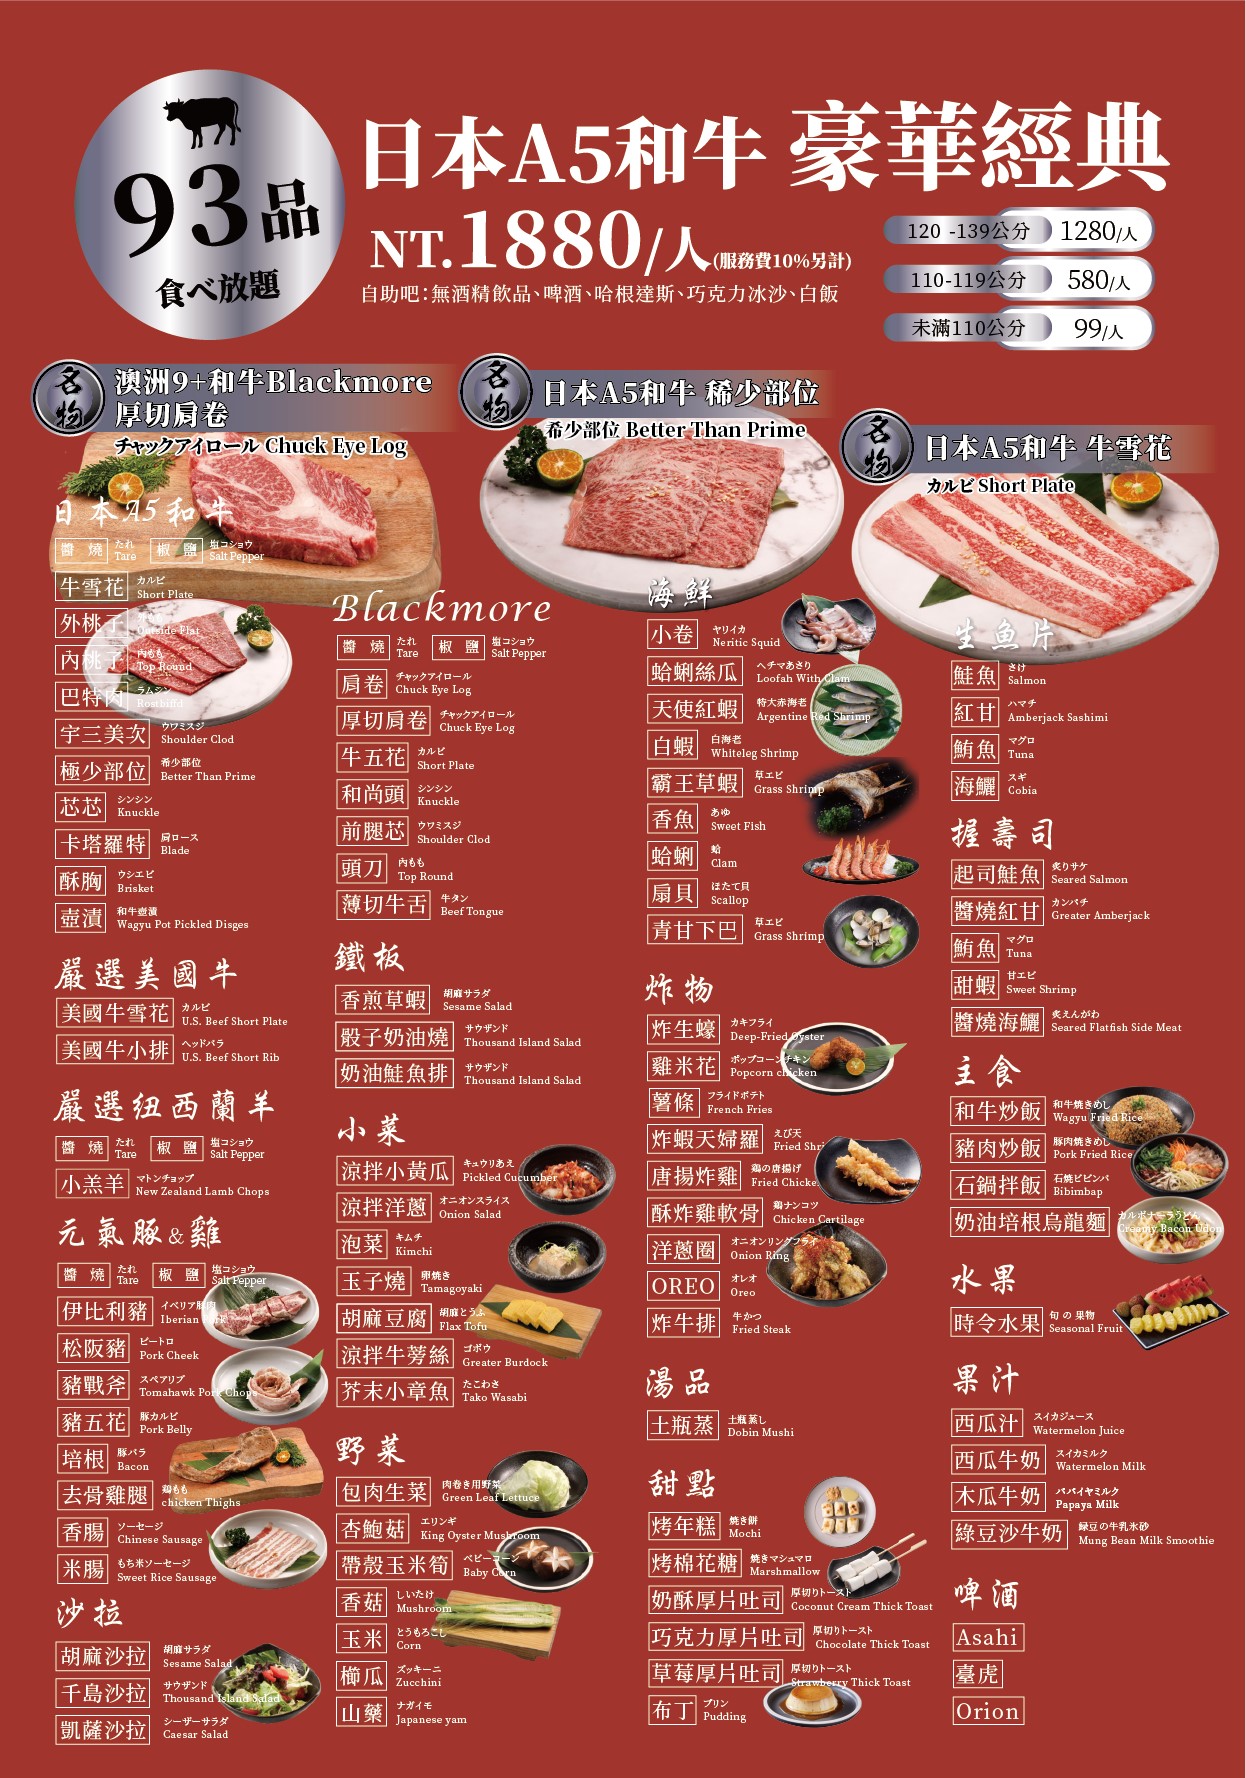 「YKNK club」日本 A5 和牛豪華經典套餐菜單，每人 1880 元 +10%